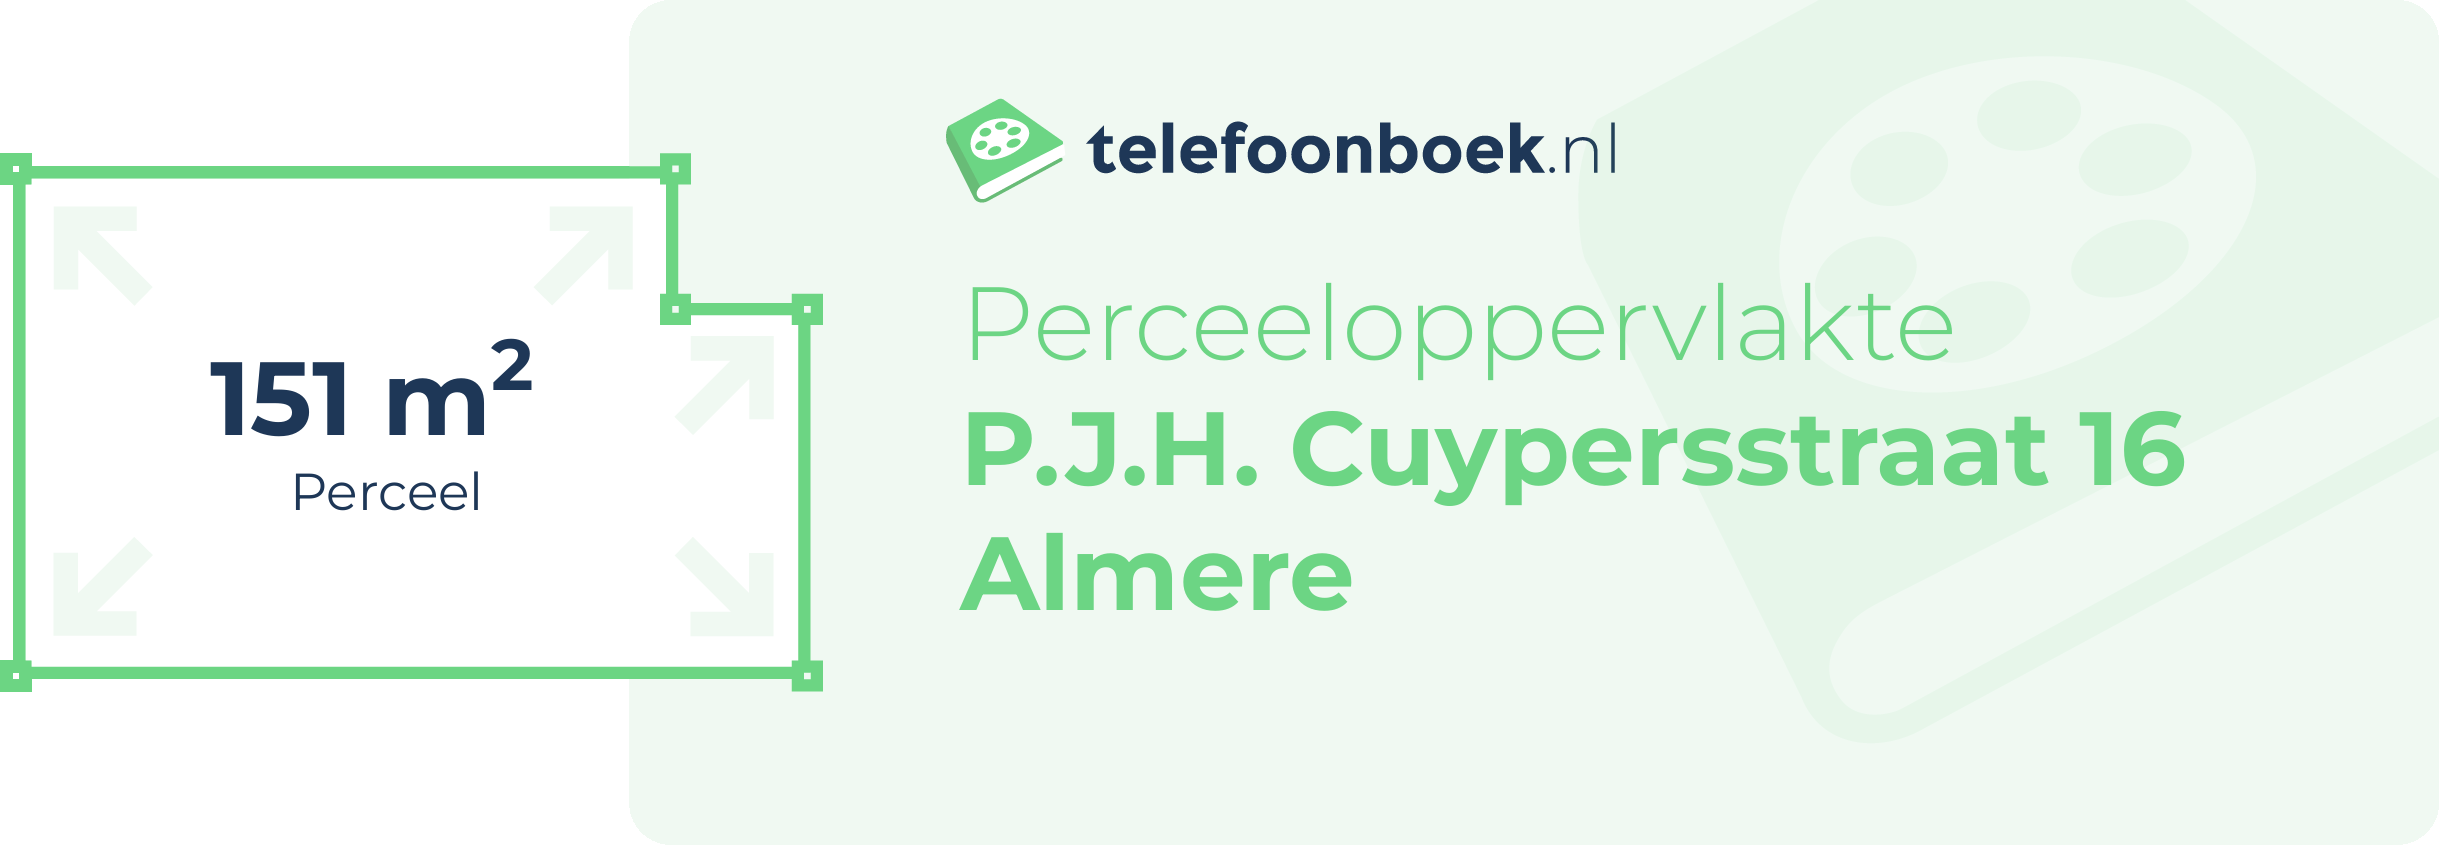 Perceeloppervlakte P.J.H. Cuypersstraat 16 Almere